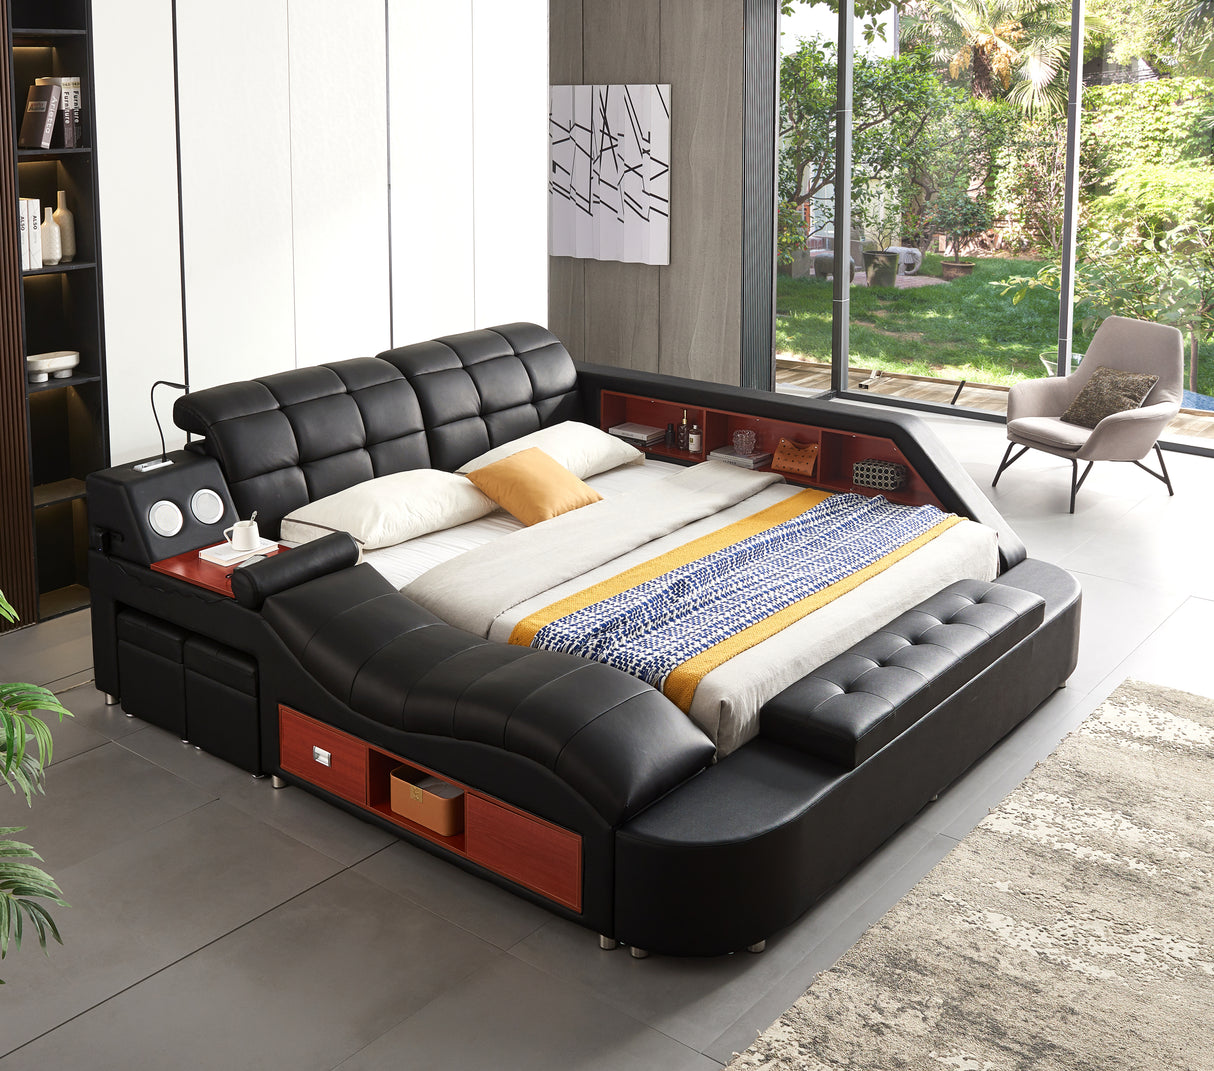 Multifunctional Upholstered Storage Bed Frame, Massage Chaise Lounge on Left, King Size, Black - Home Elegance USA